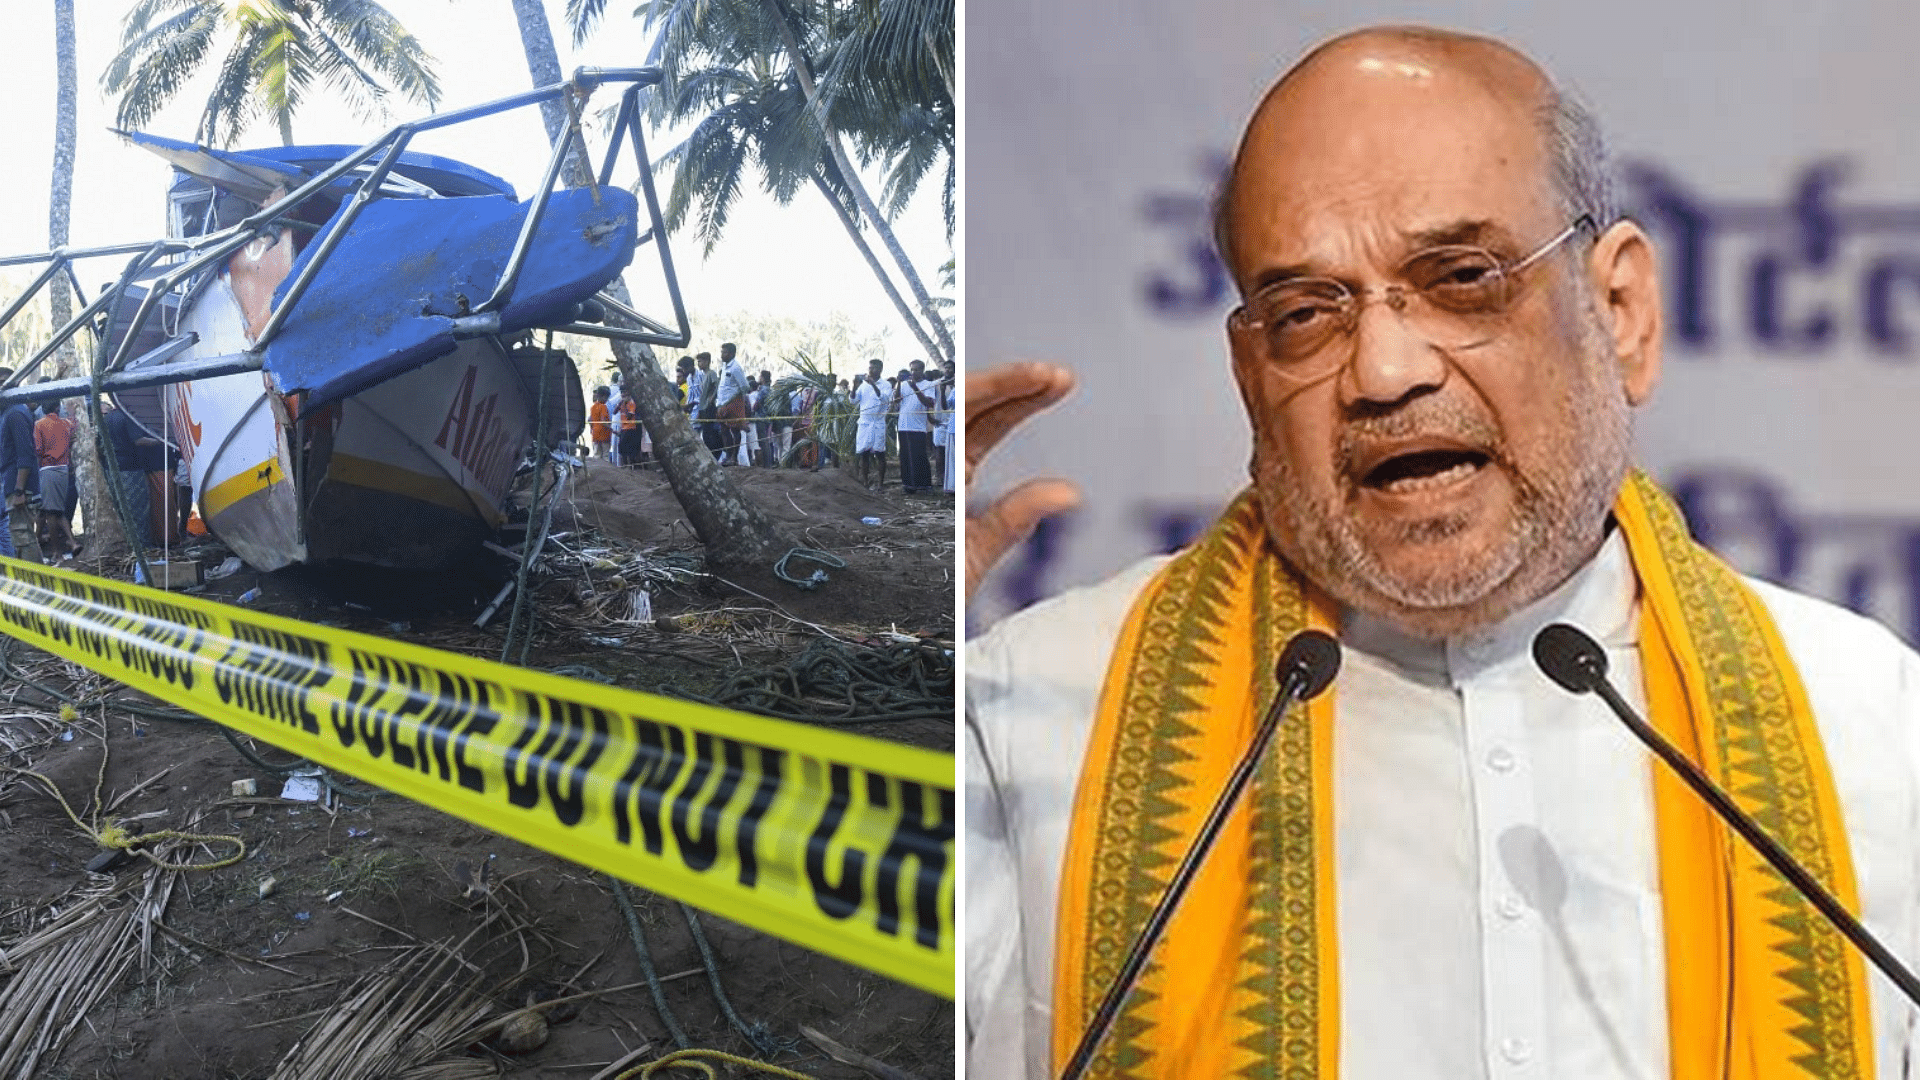 <div class="paragraphs"><p>Recap: Kerala HC Expresses Shock Over Boat Tragedy, SC On Amit Shah's Remarks</p></div>